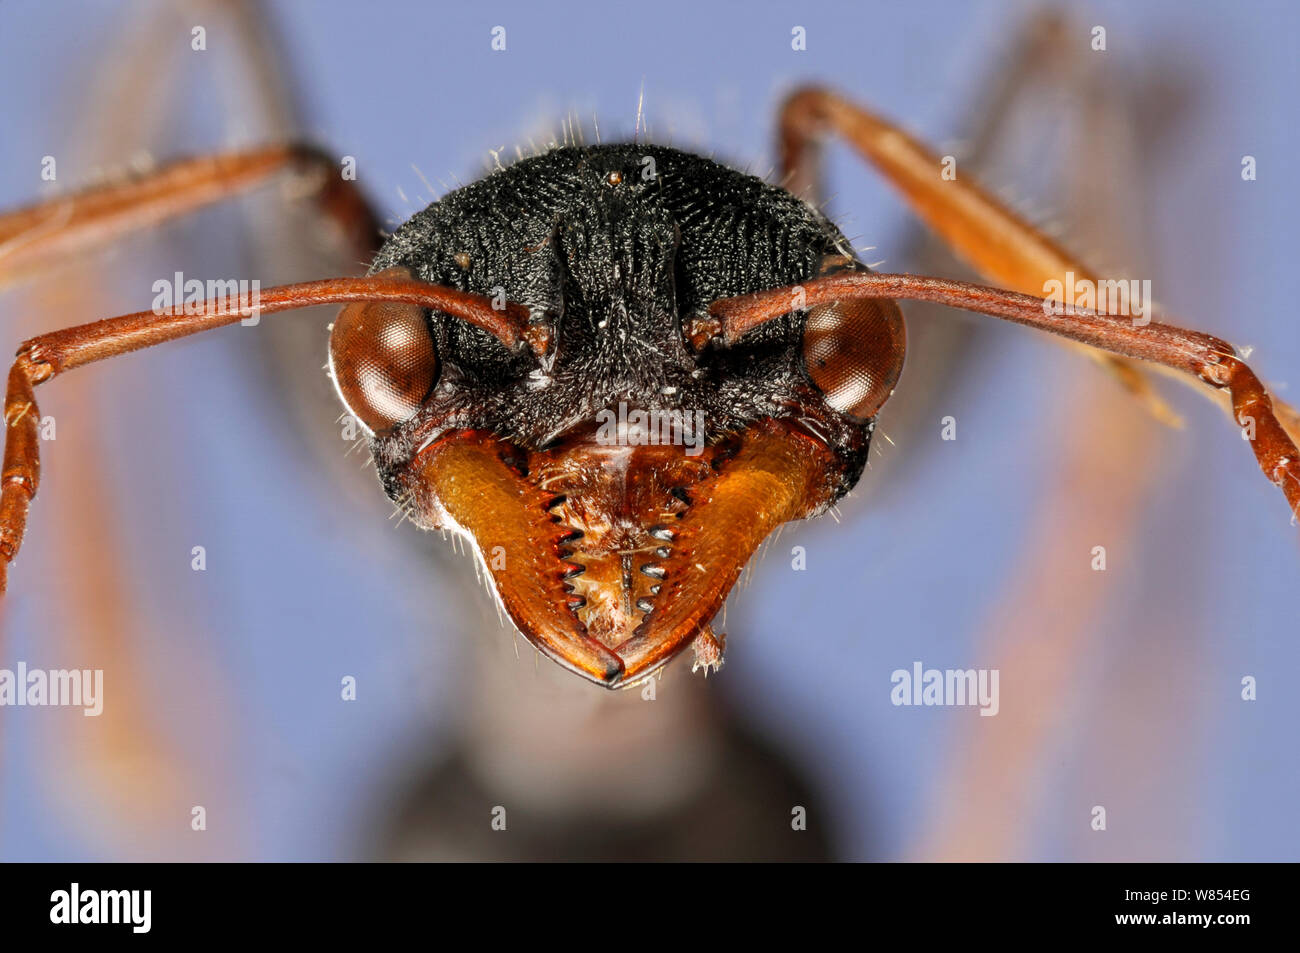 Giant Bull Ant (Myrmecia tarsata) close-up portrait. Specimen photographed using digital focus stacking Stock Photo